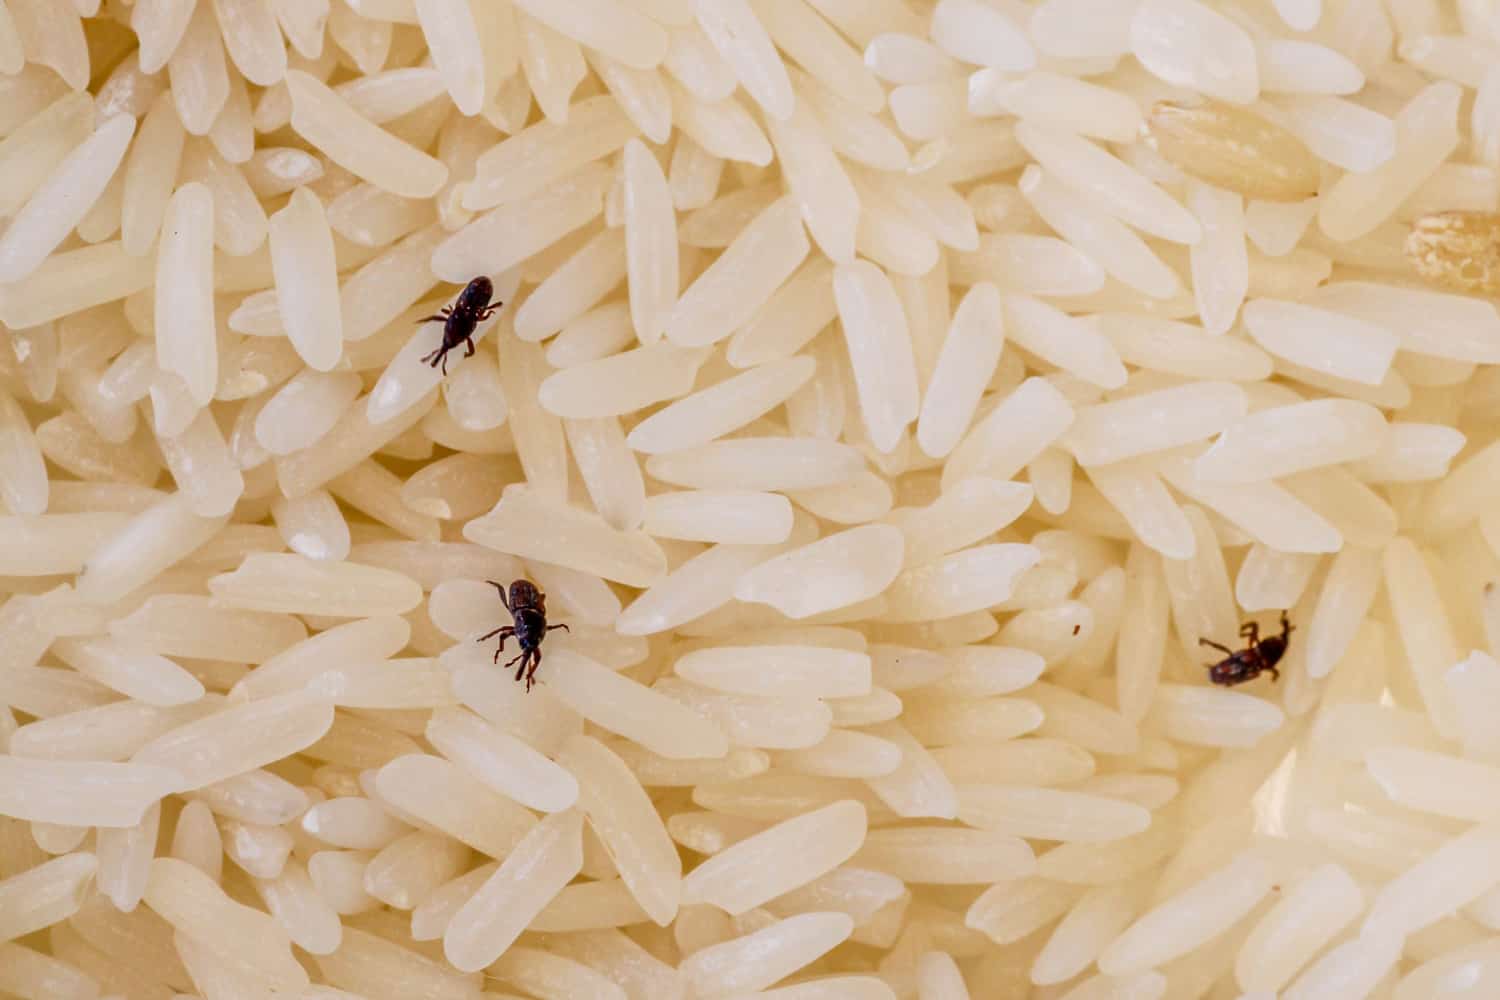 Weevils on grains of rice